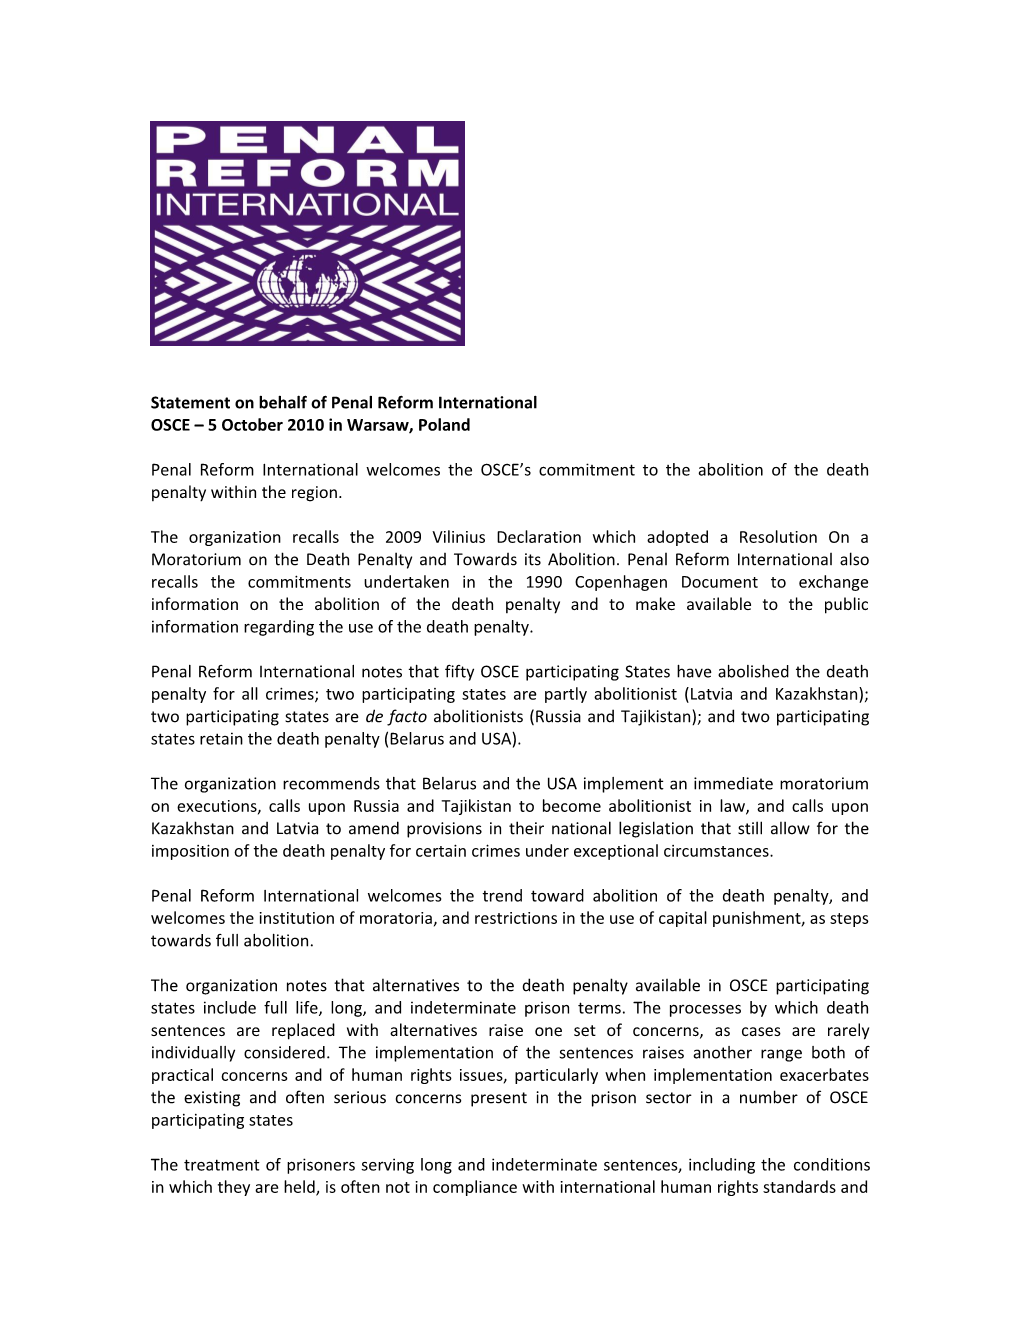 Statement on Behalf of Penal Reform International